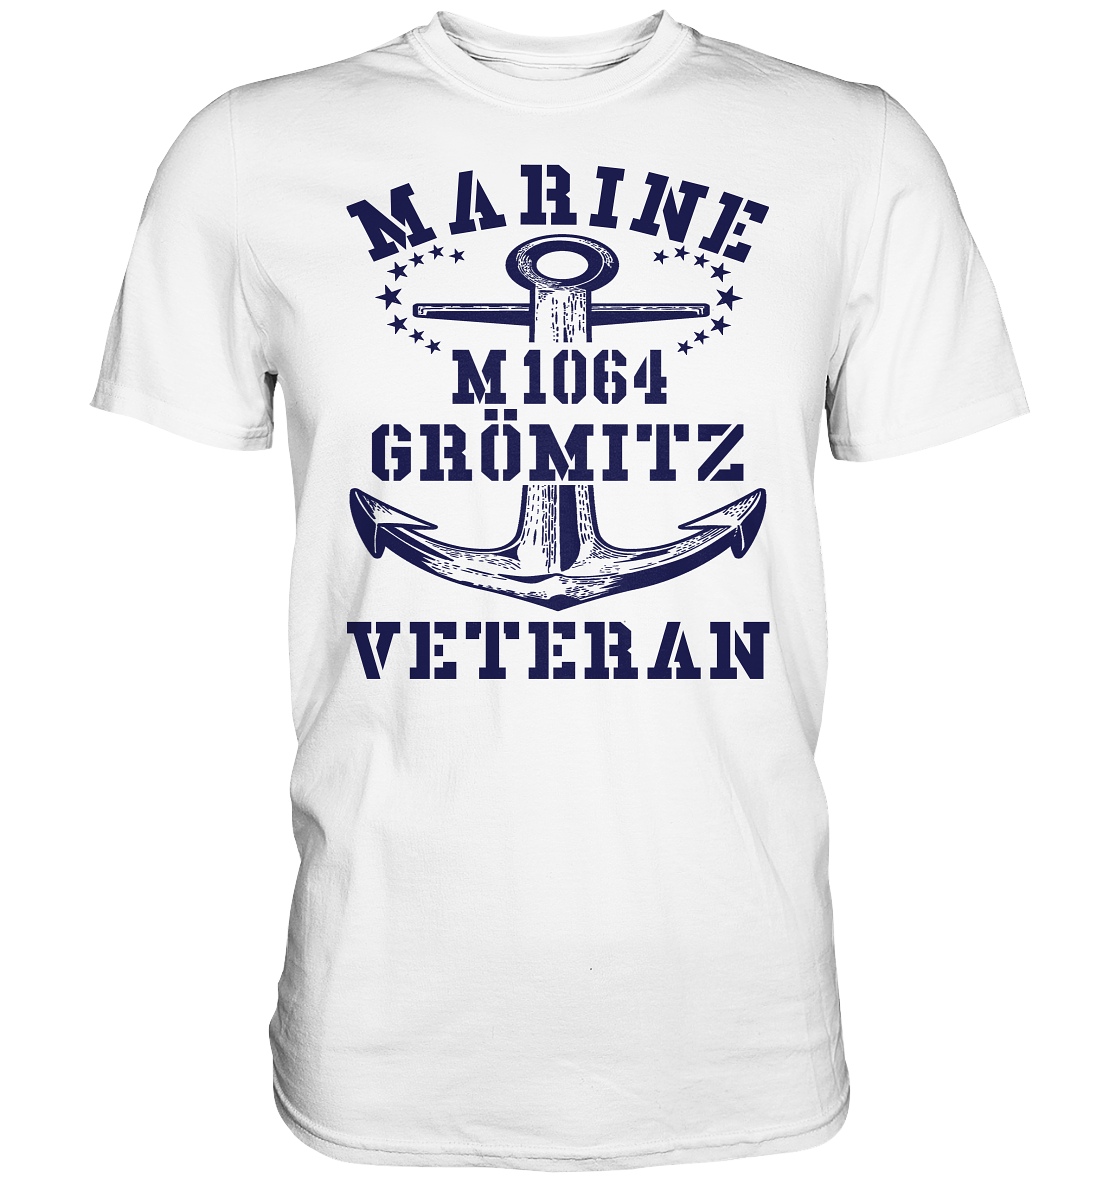 Mij.-Boot M1064 GRÖMITZ Marine Veteran - Premium Shirt